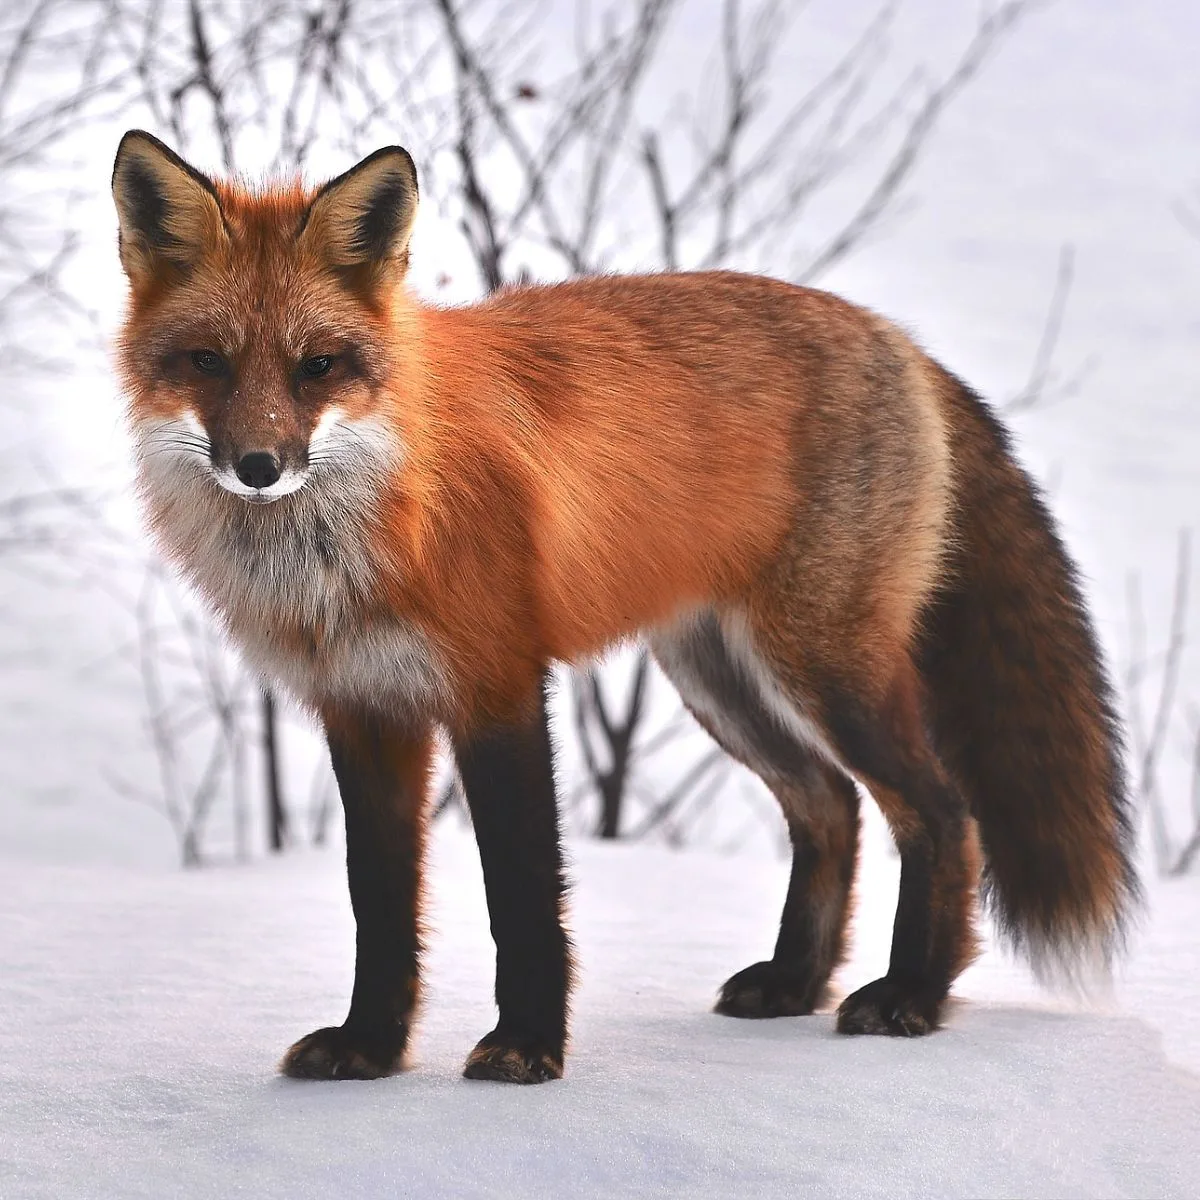 fox biblical meaning